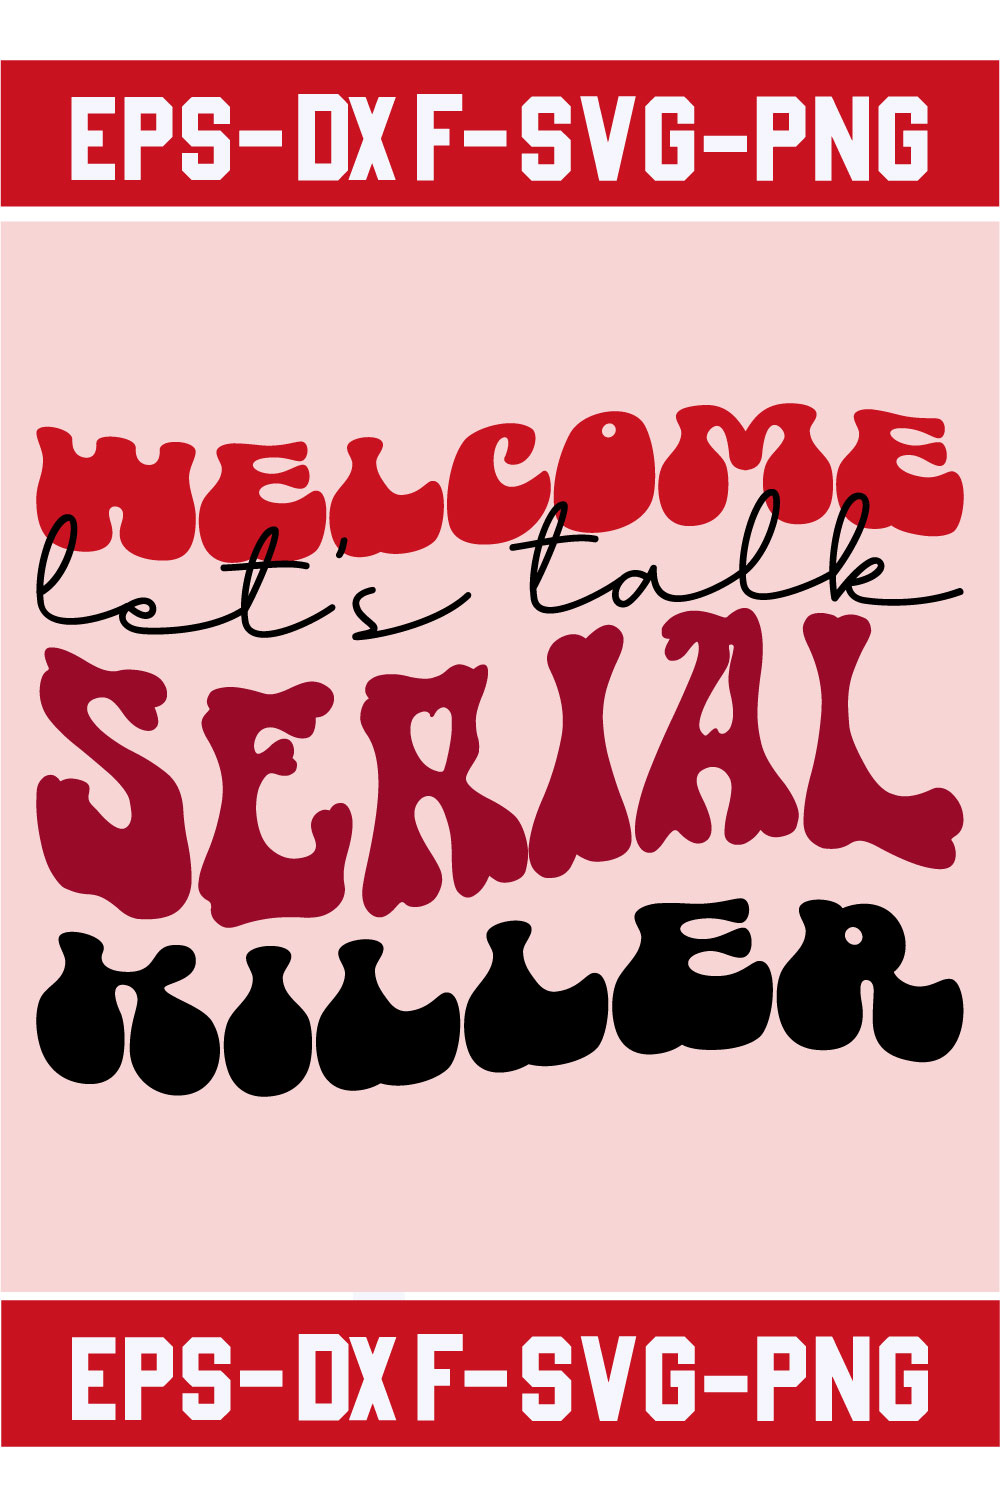 Welcome Let's Talk Serial Killer pinterest preview image.